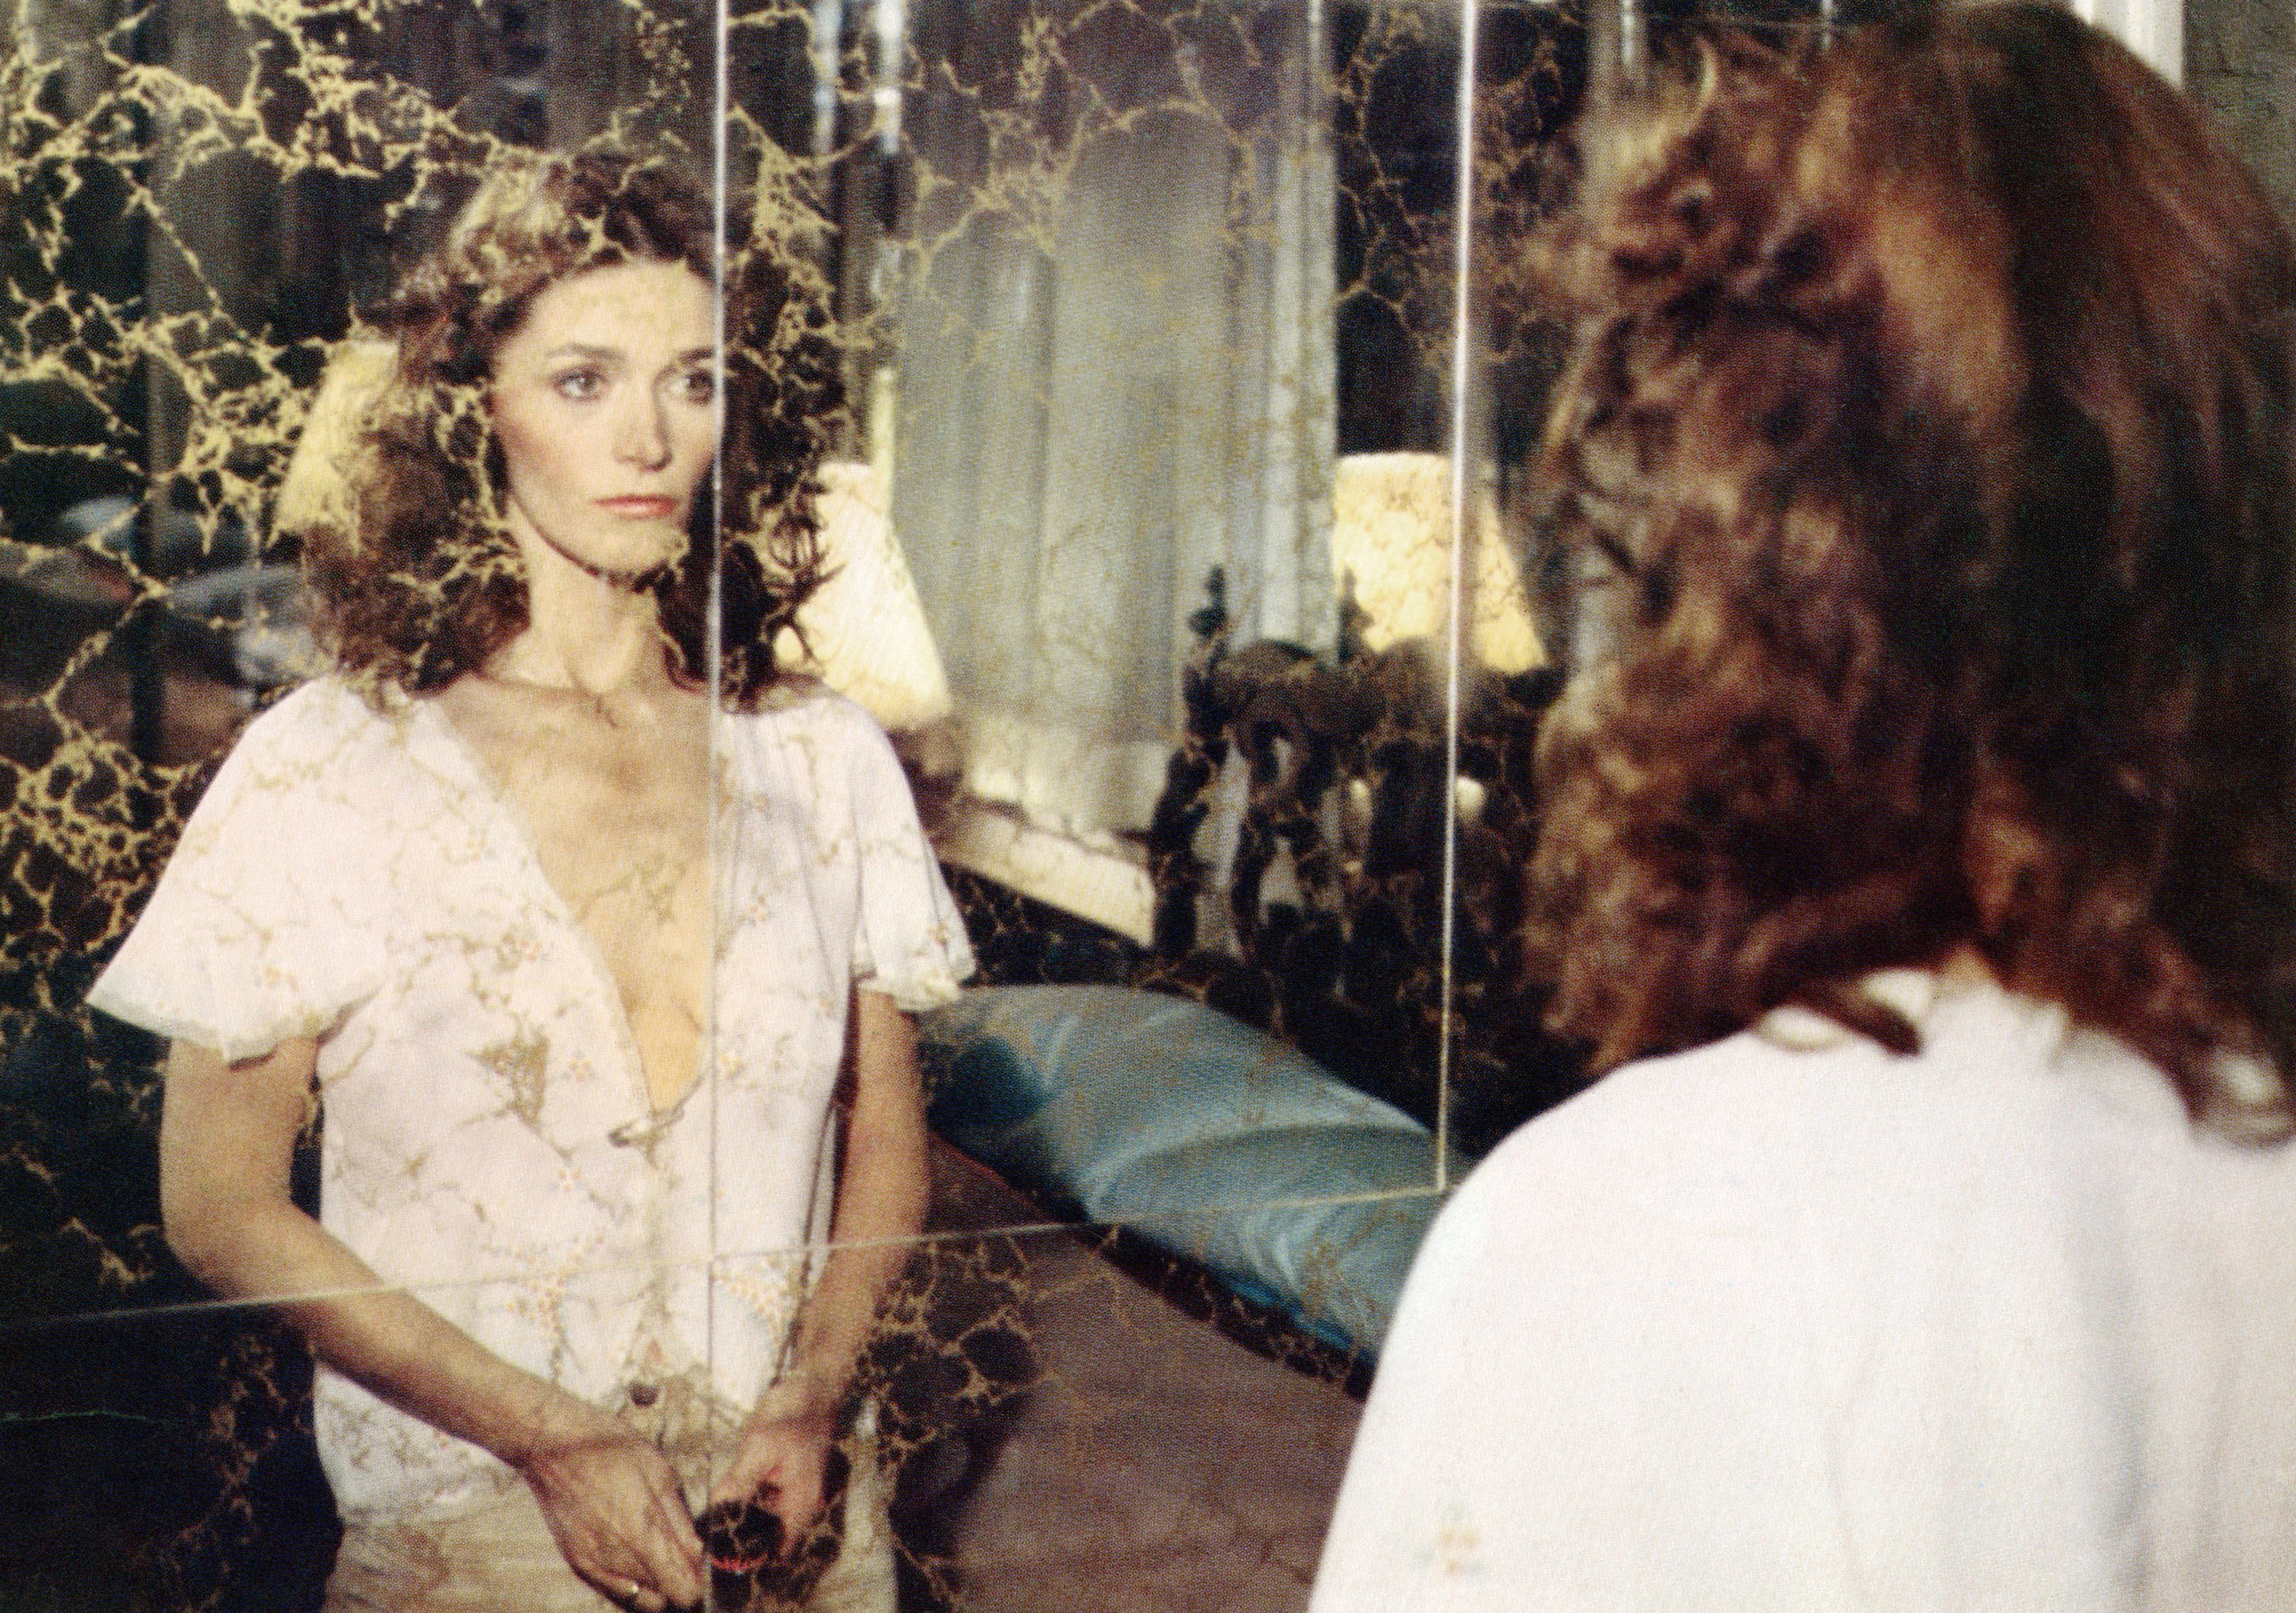 Margot Kidder looks into a mirror